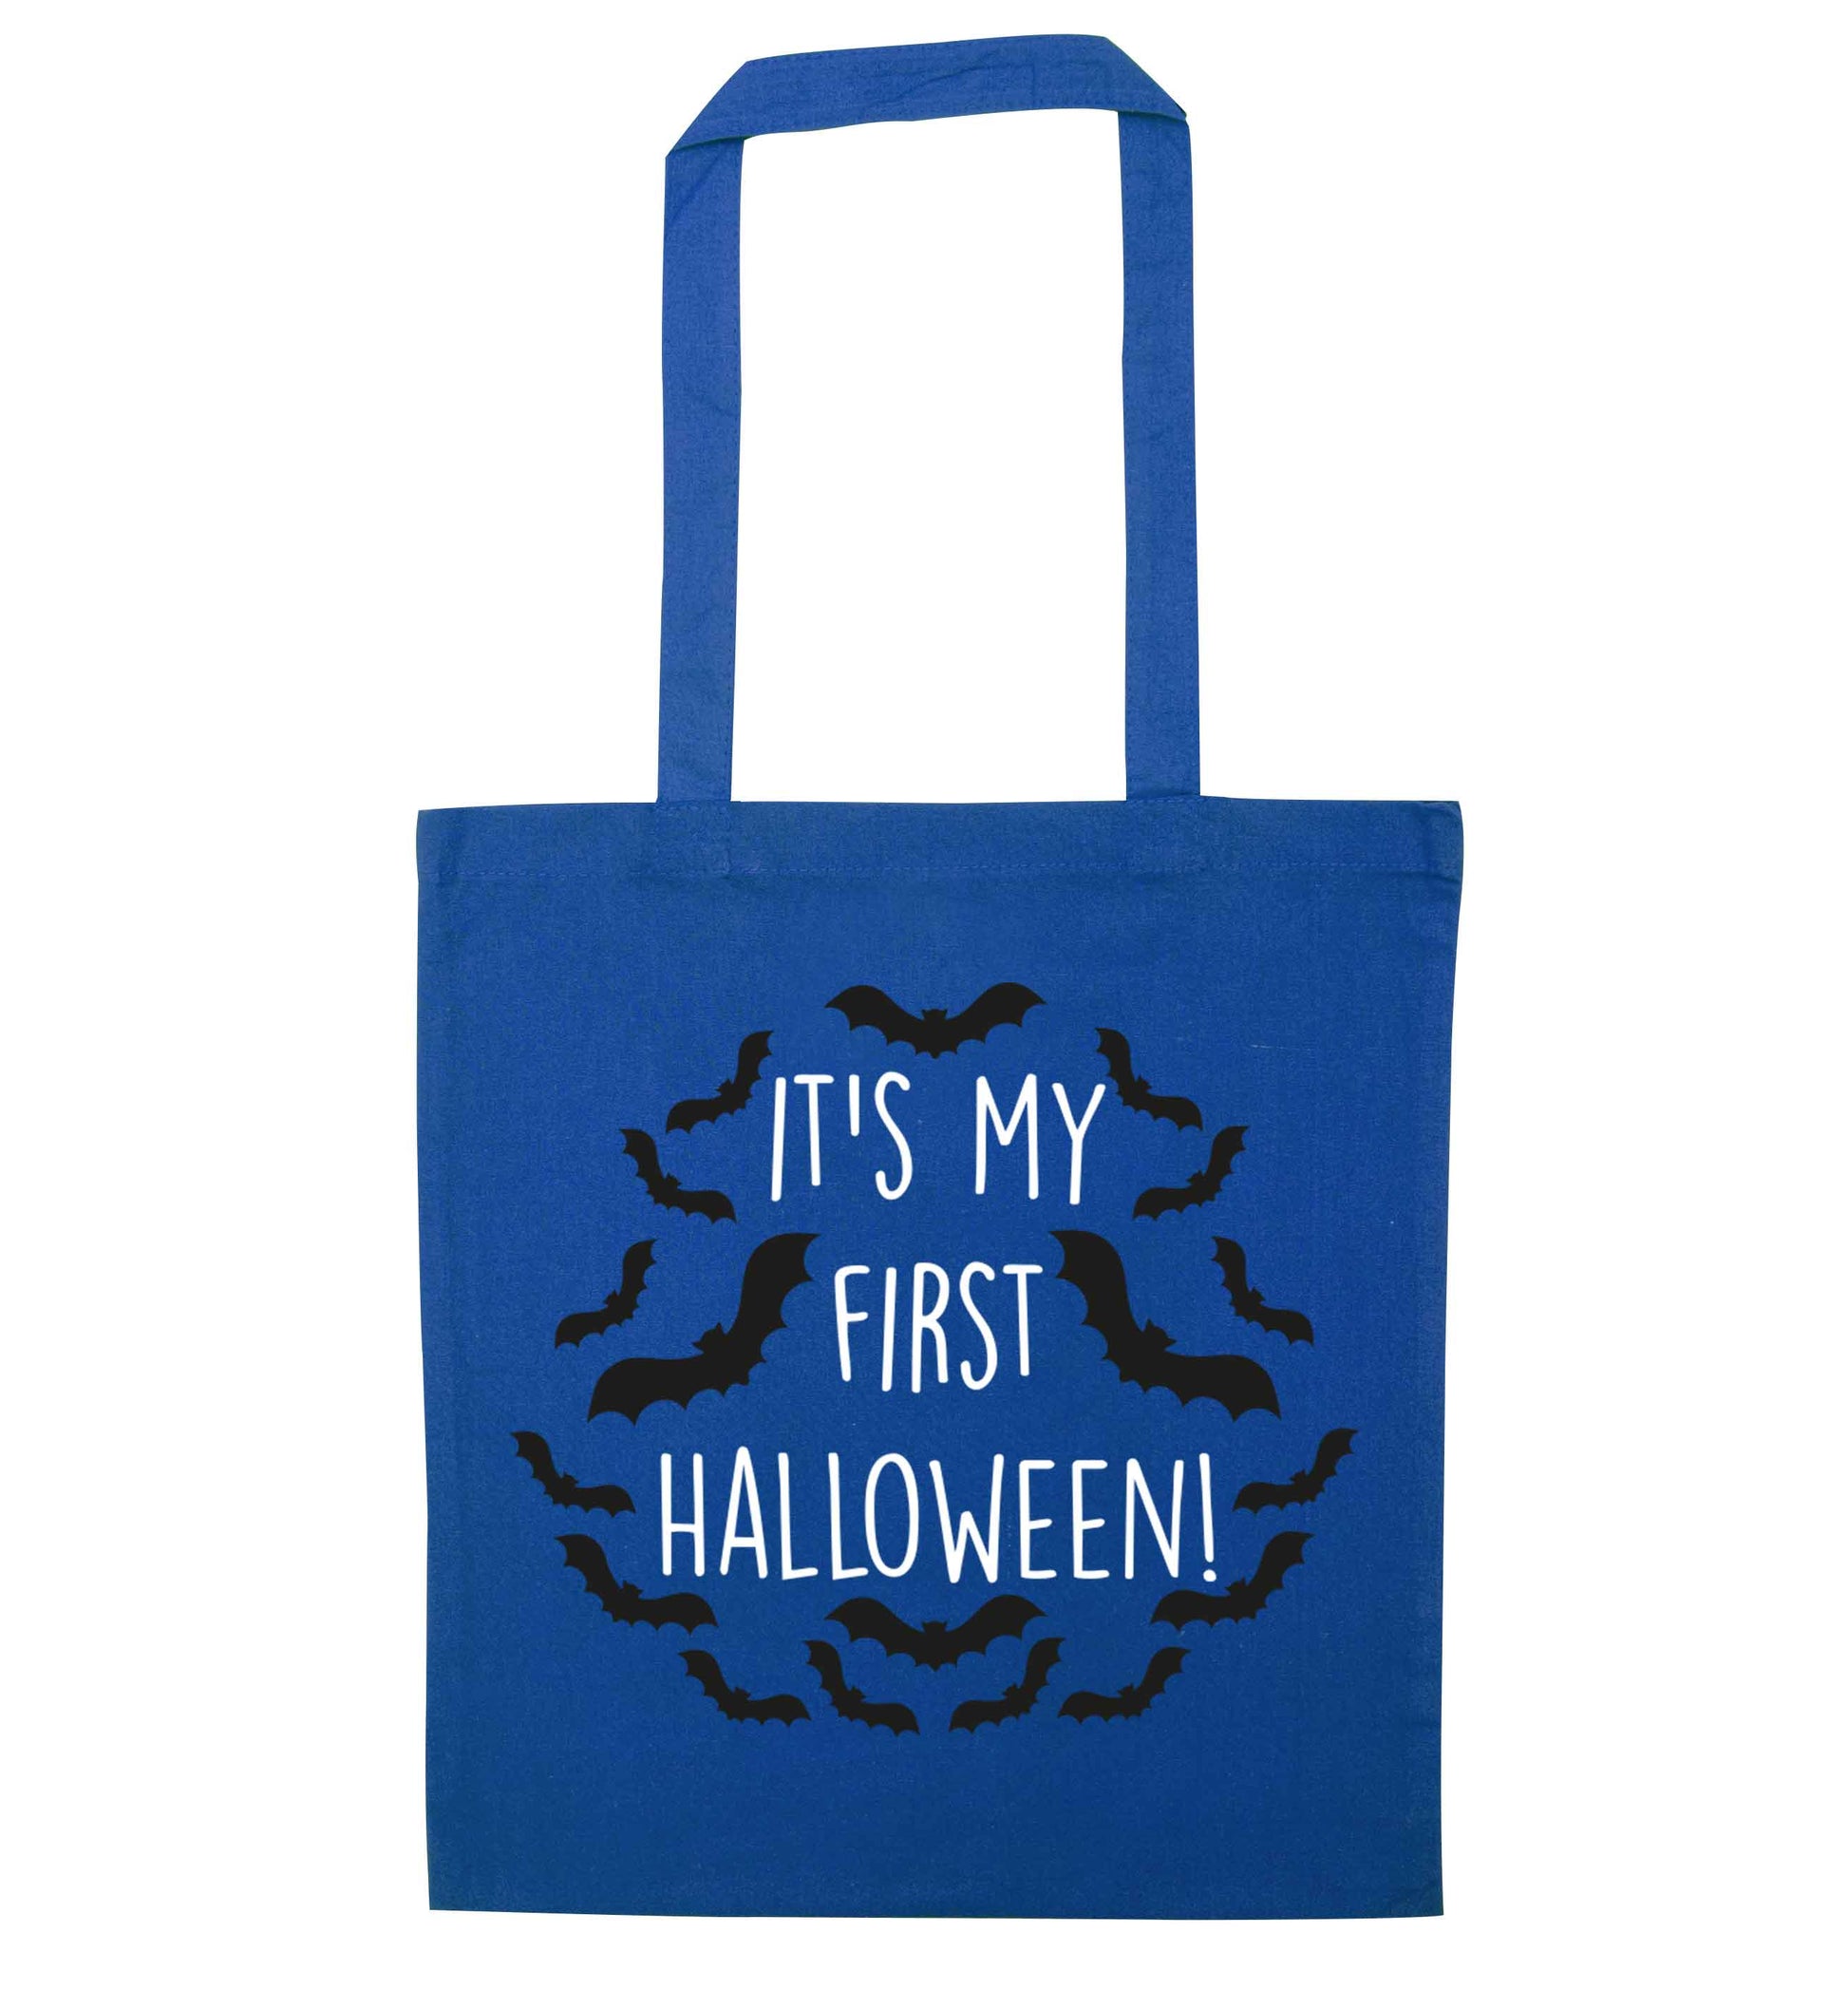 It's my first halloween - bat border blue tote bag